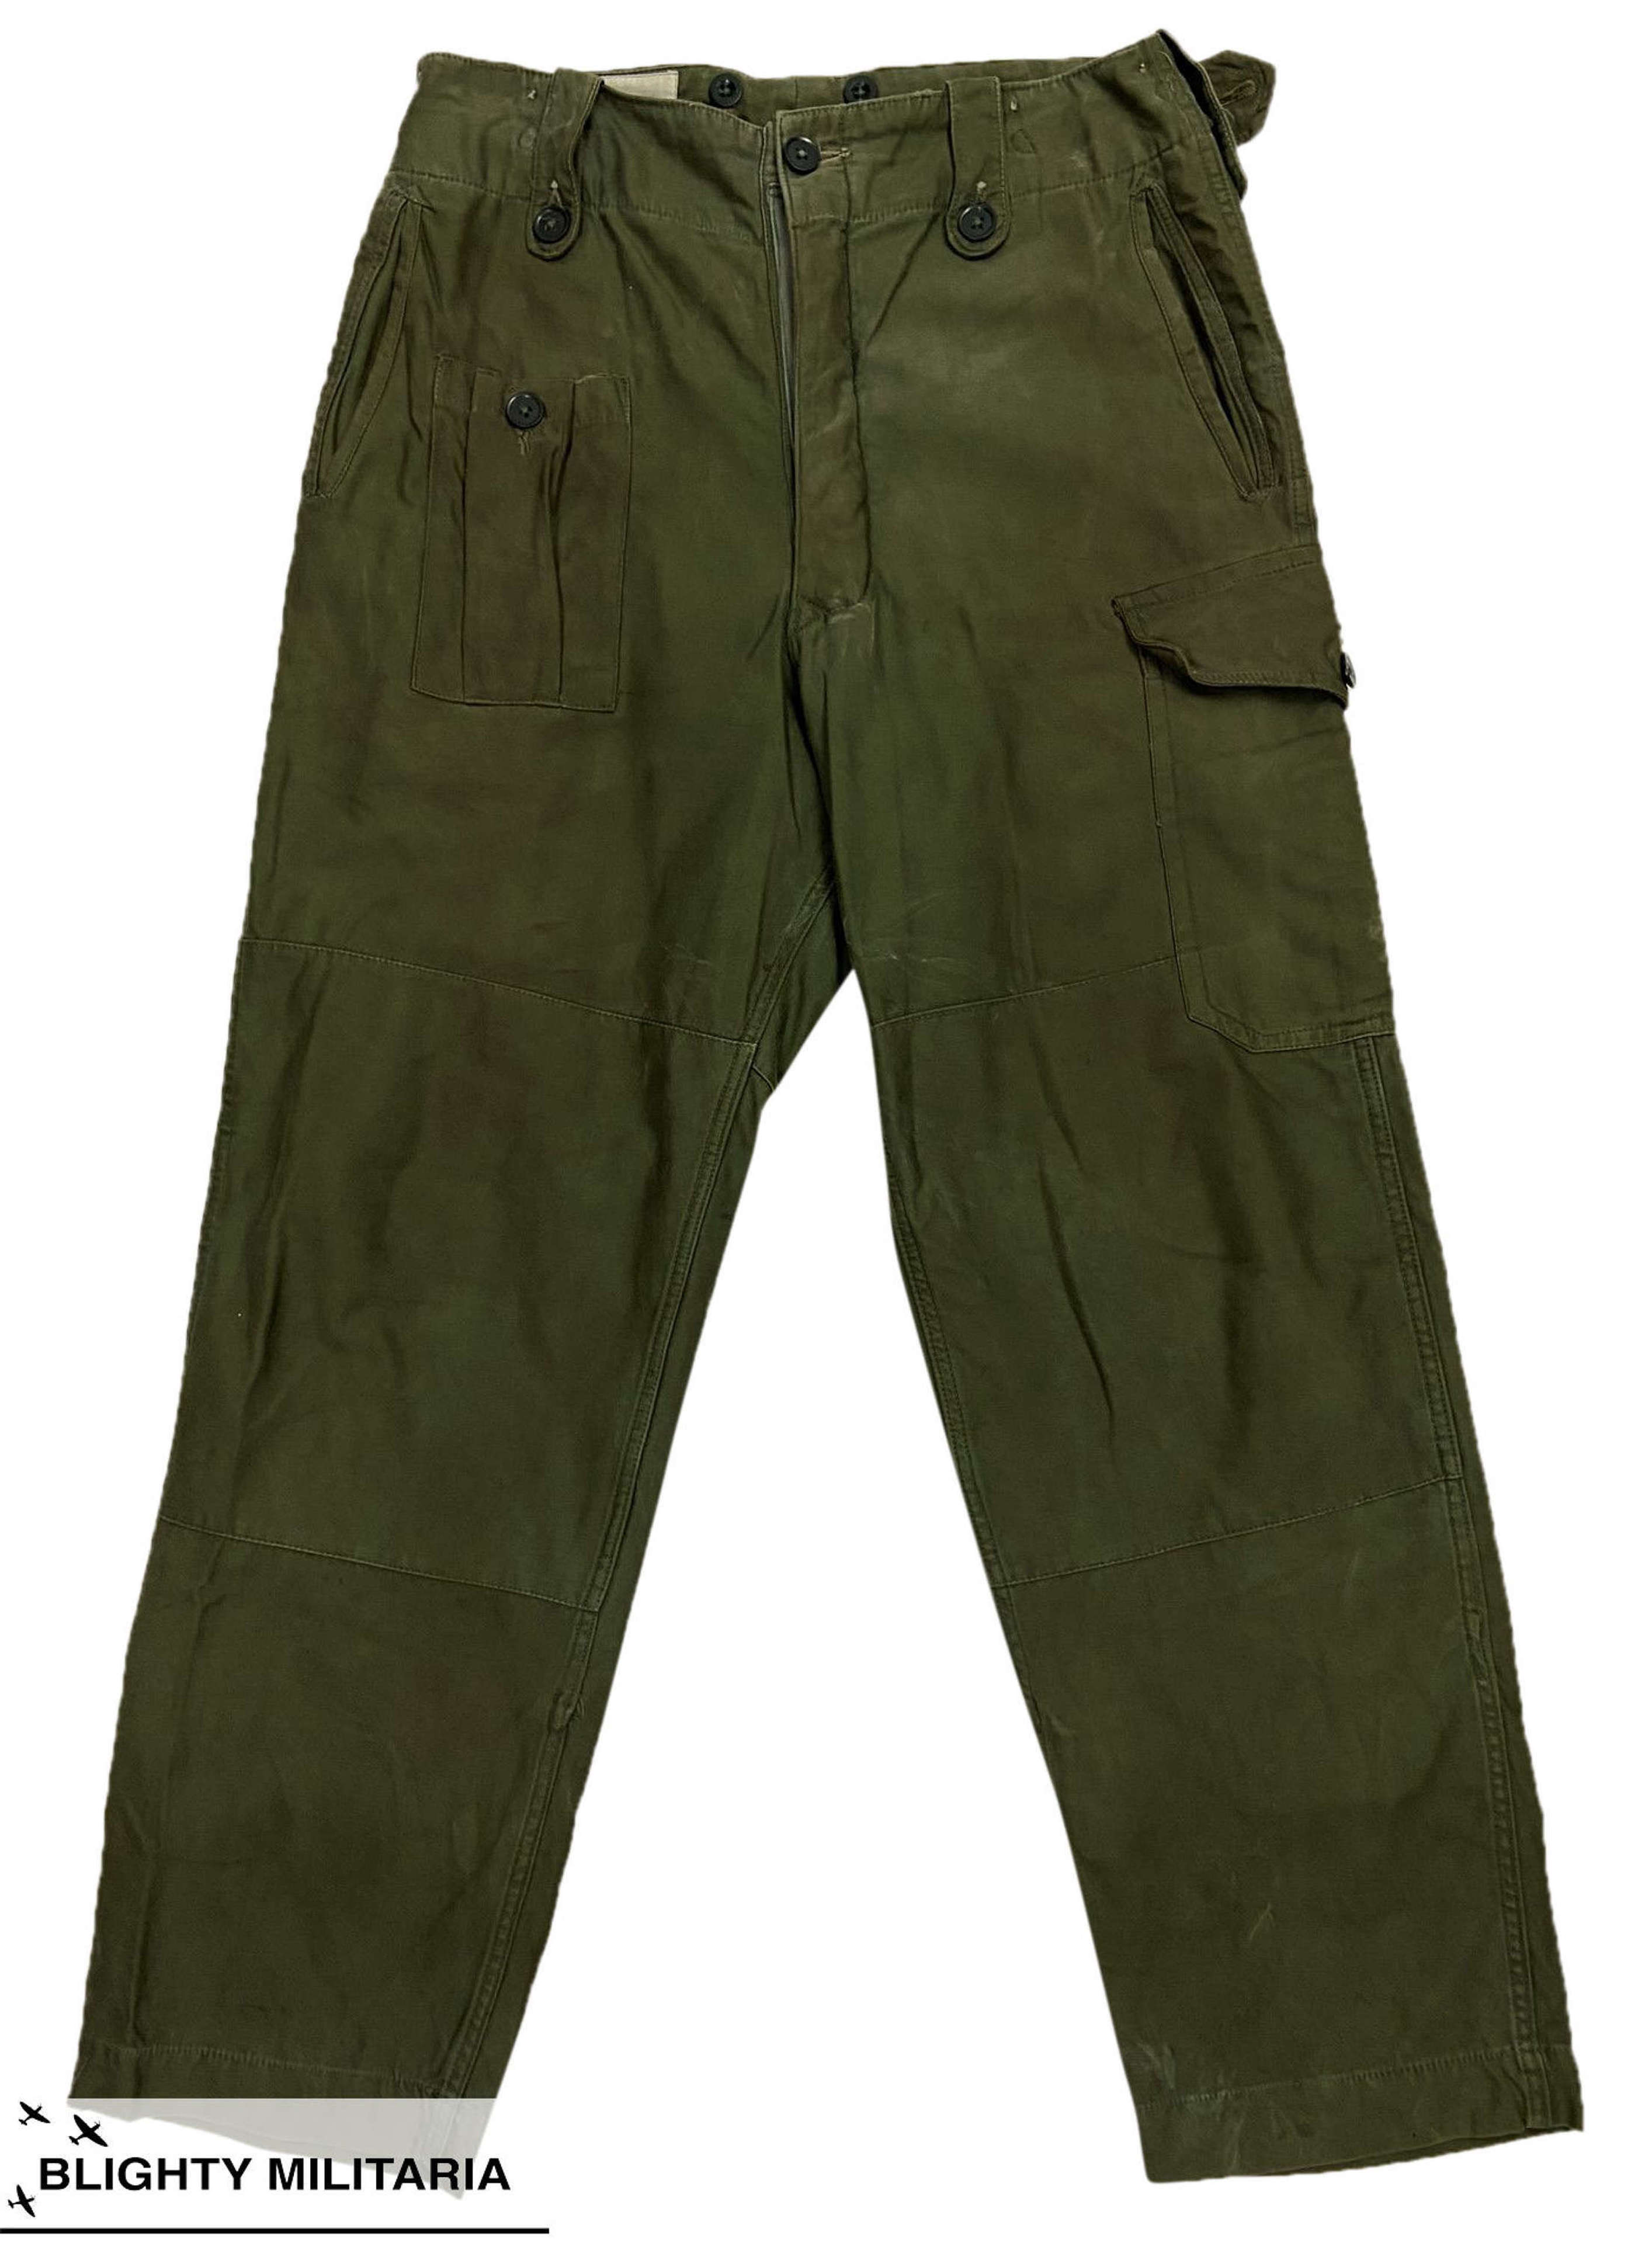 Original 1960 Pattern British Army Combat Trousers 32x28.5